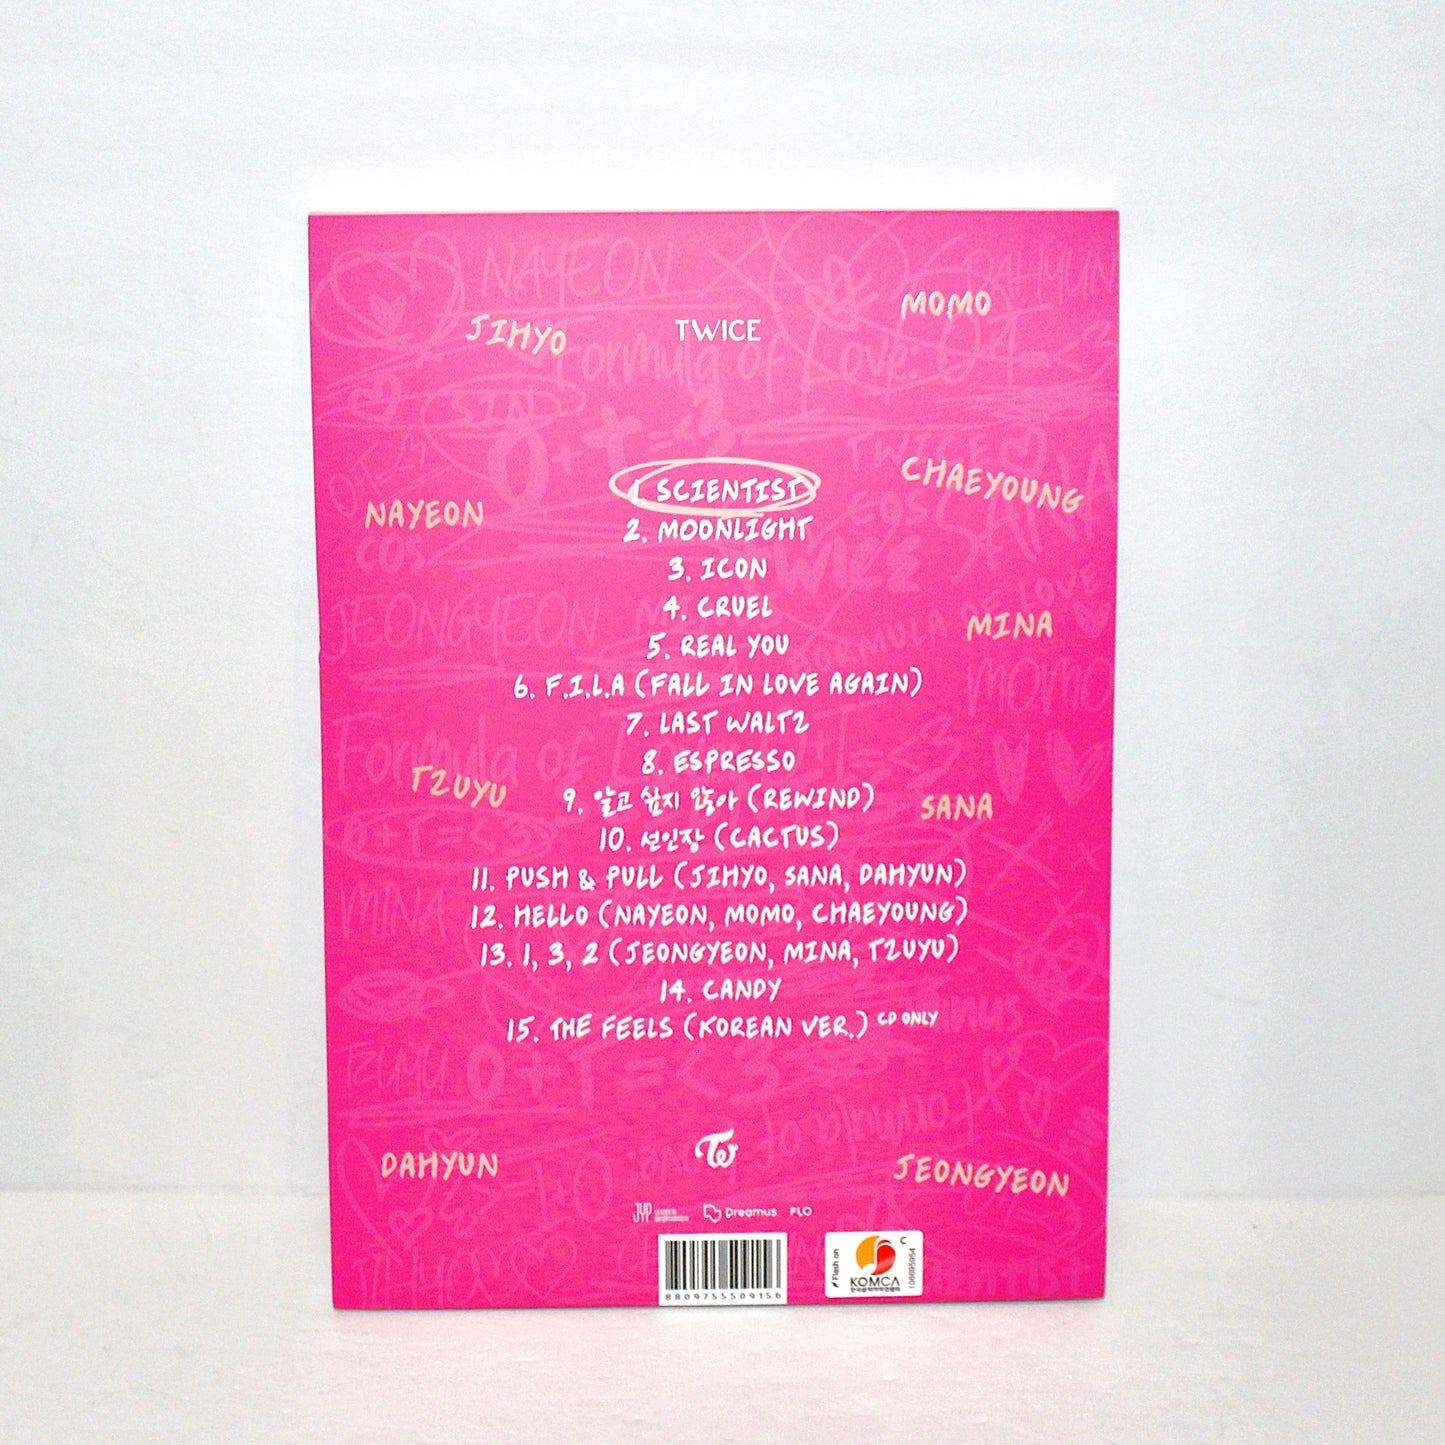 TWICE 3rd Album - Formula of Love: O+T=<3 | Full of Love Ver.